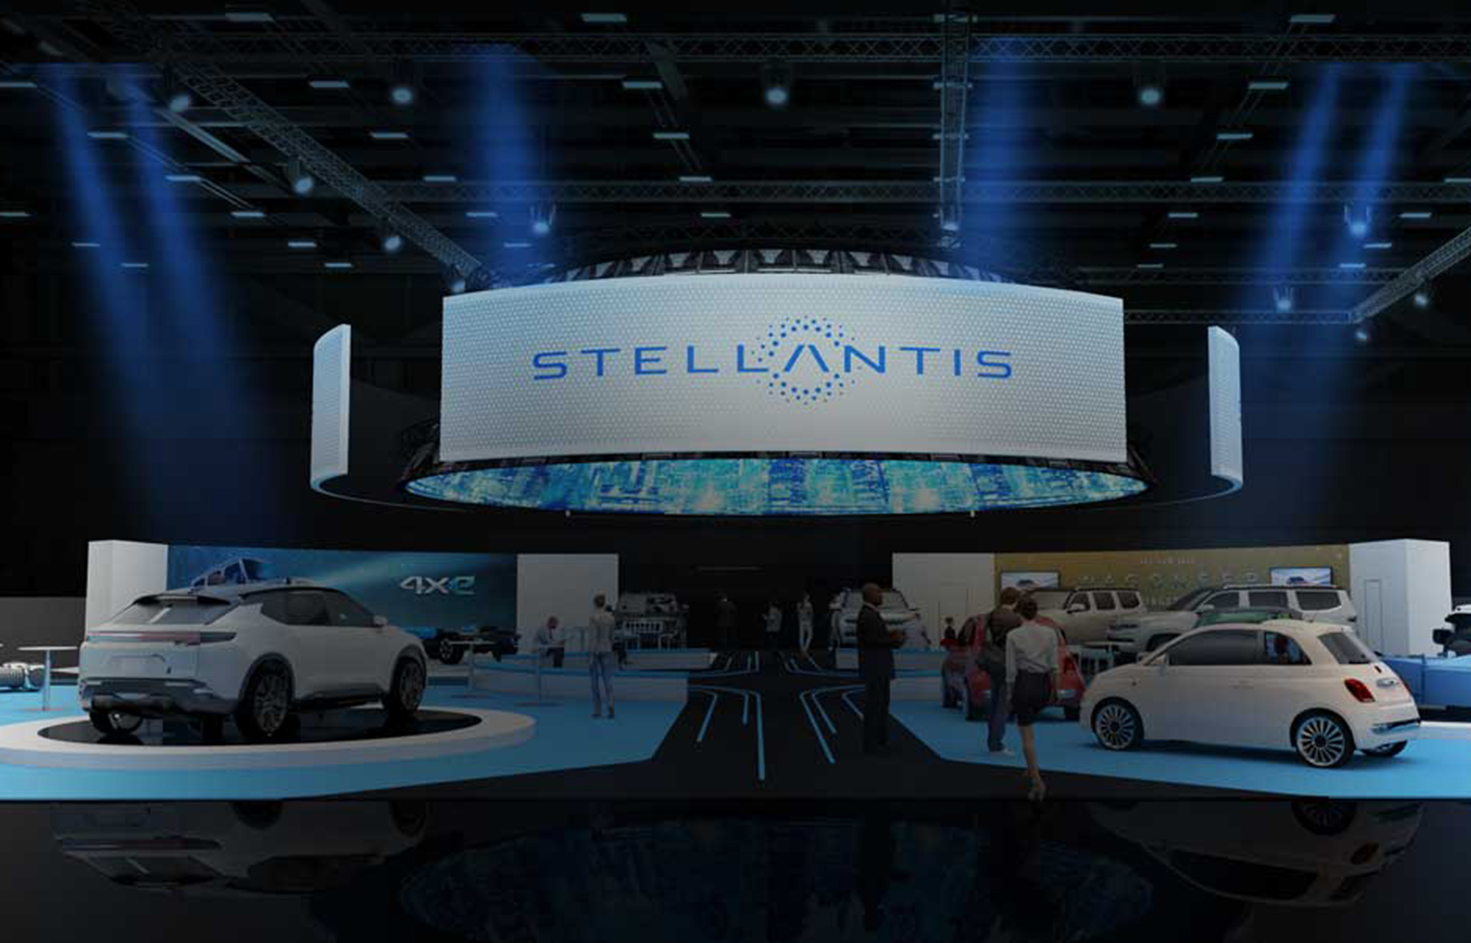 image of Stellantis @ CES 2022